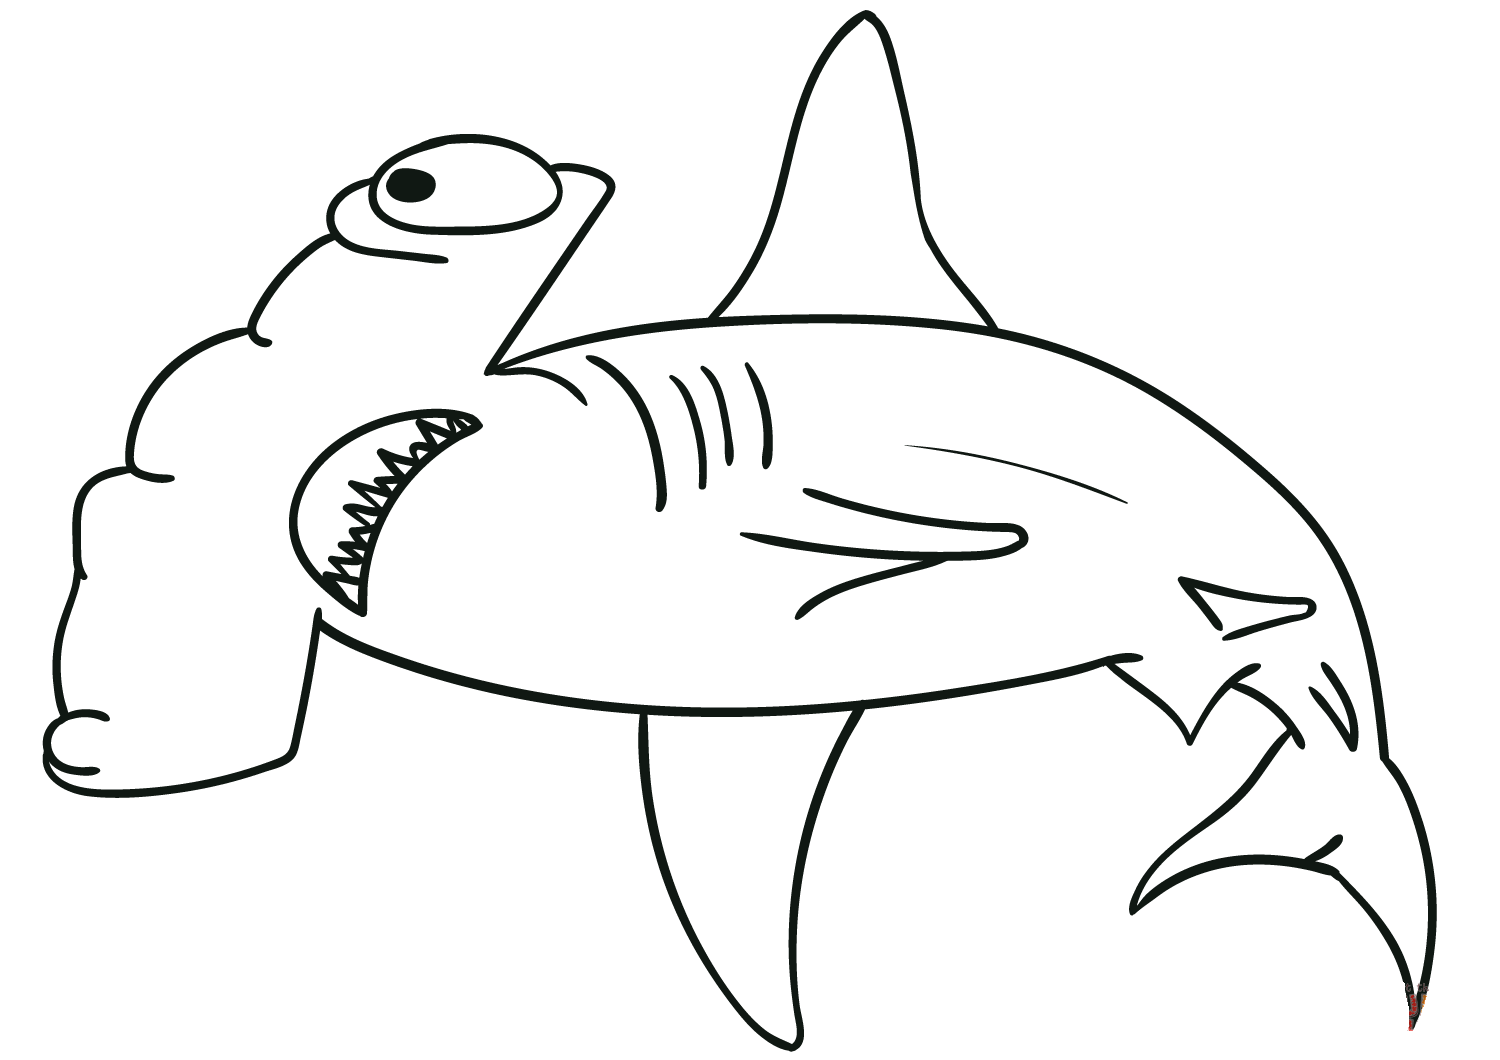 Hammerhead shark has a hammer-like shape Coloring Page